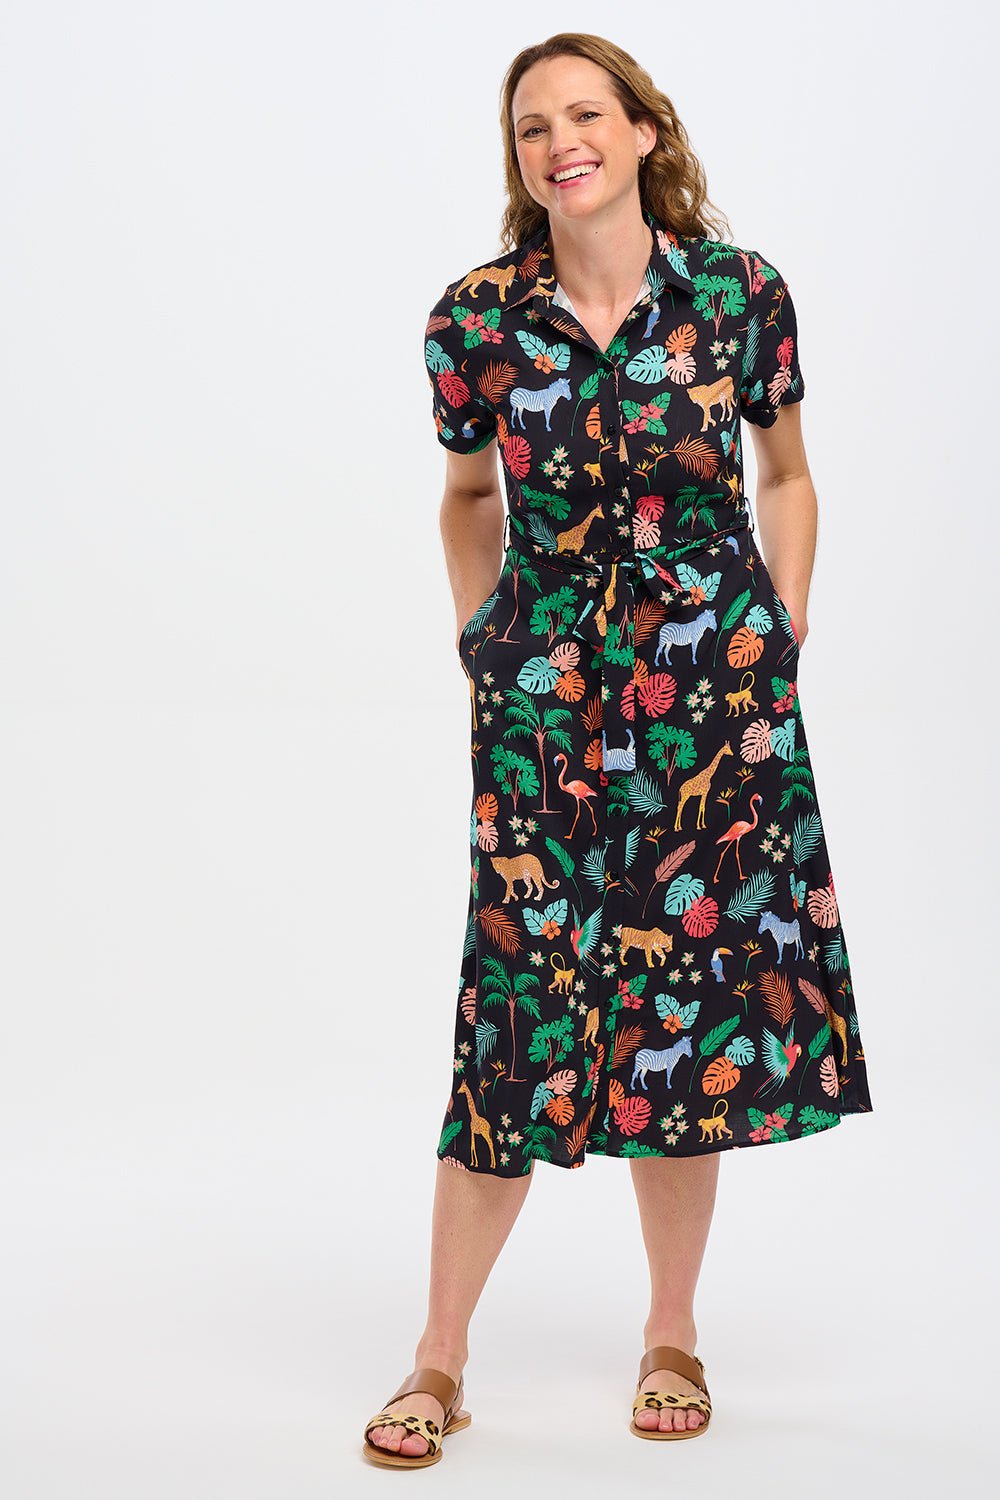 Lauretta Shirt Dress - Tropical Safari - Rockamilly-Dresses-Vintage